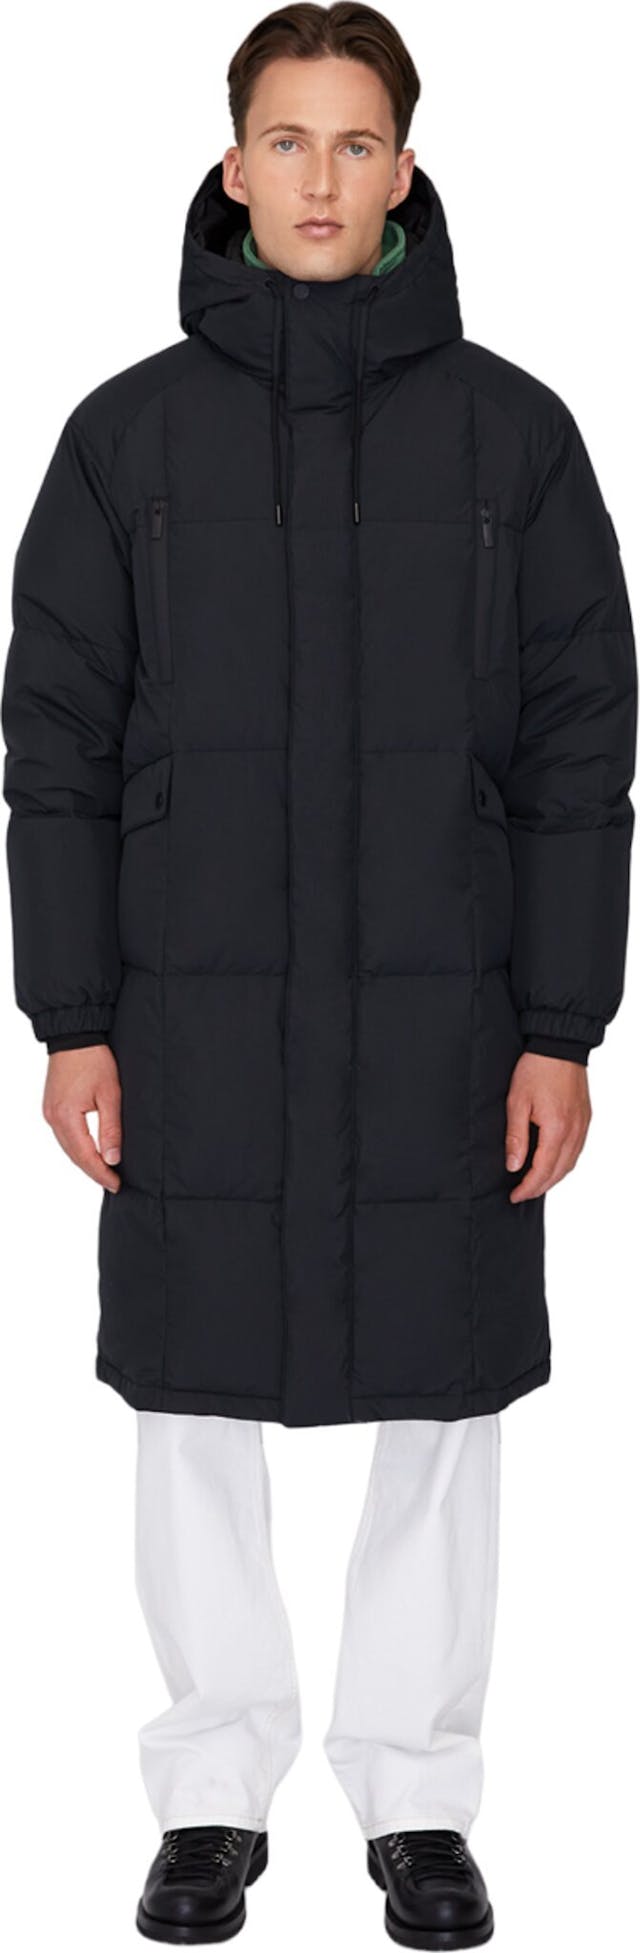 Product image for Jackson Hooded Down Puffer Jacket - Regular - Men's